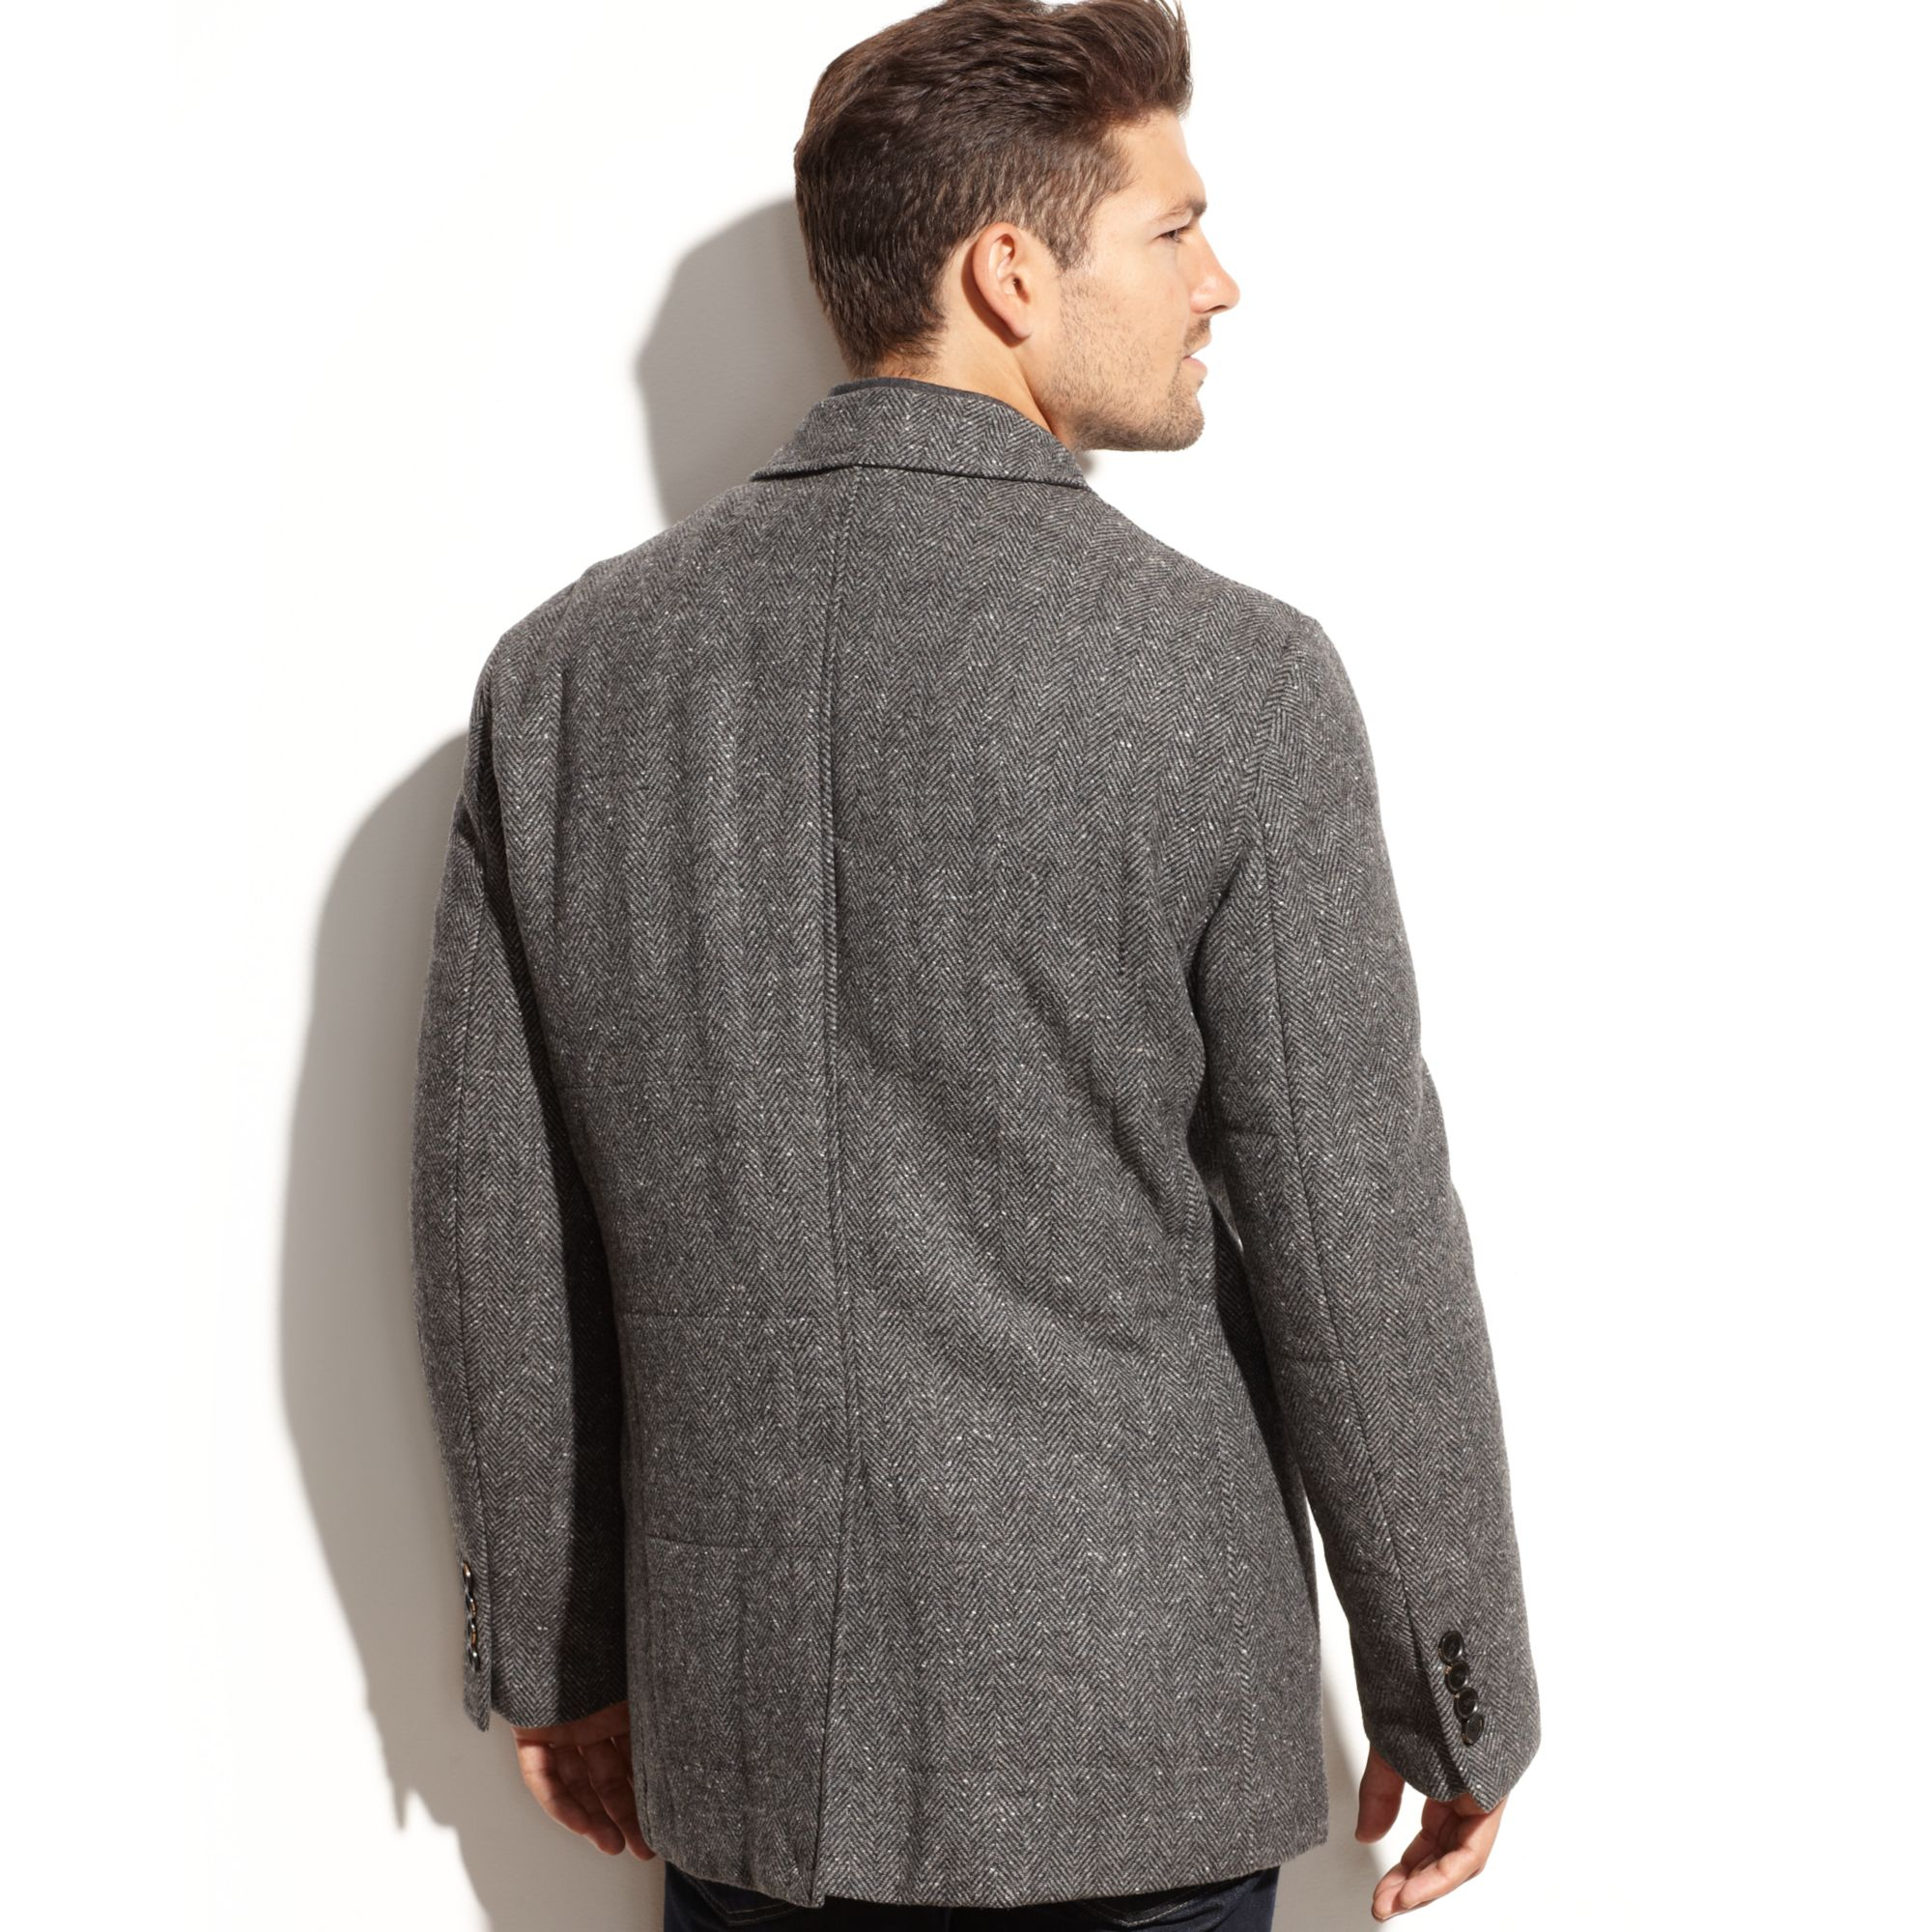 london-fog-gray-lebanon-wool-blend-microsuede-bib-tweed-blazer-product-1-24370845-1-492214996-normal.jpeg